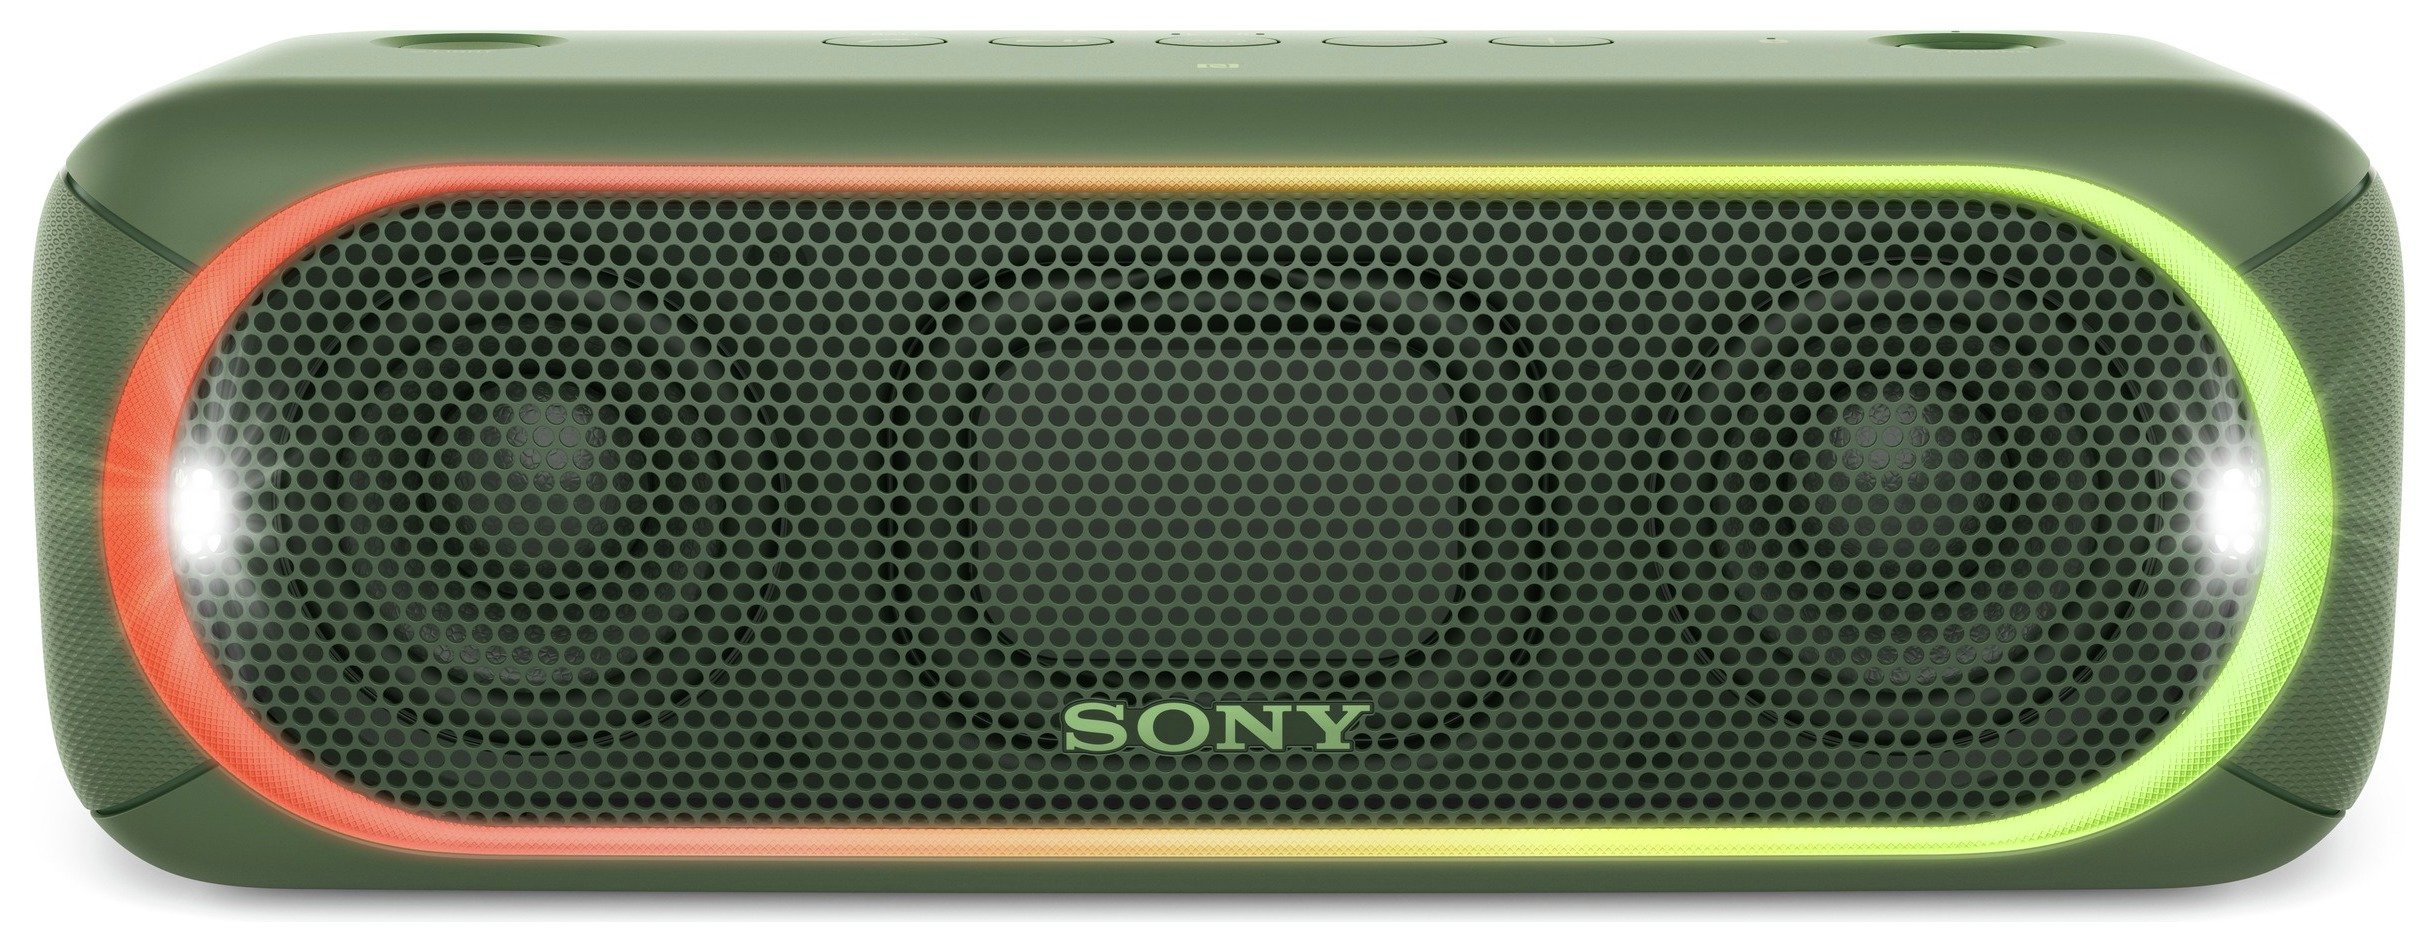 Sony SRSXB30G Portable Wireless Speaker